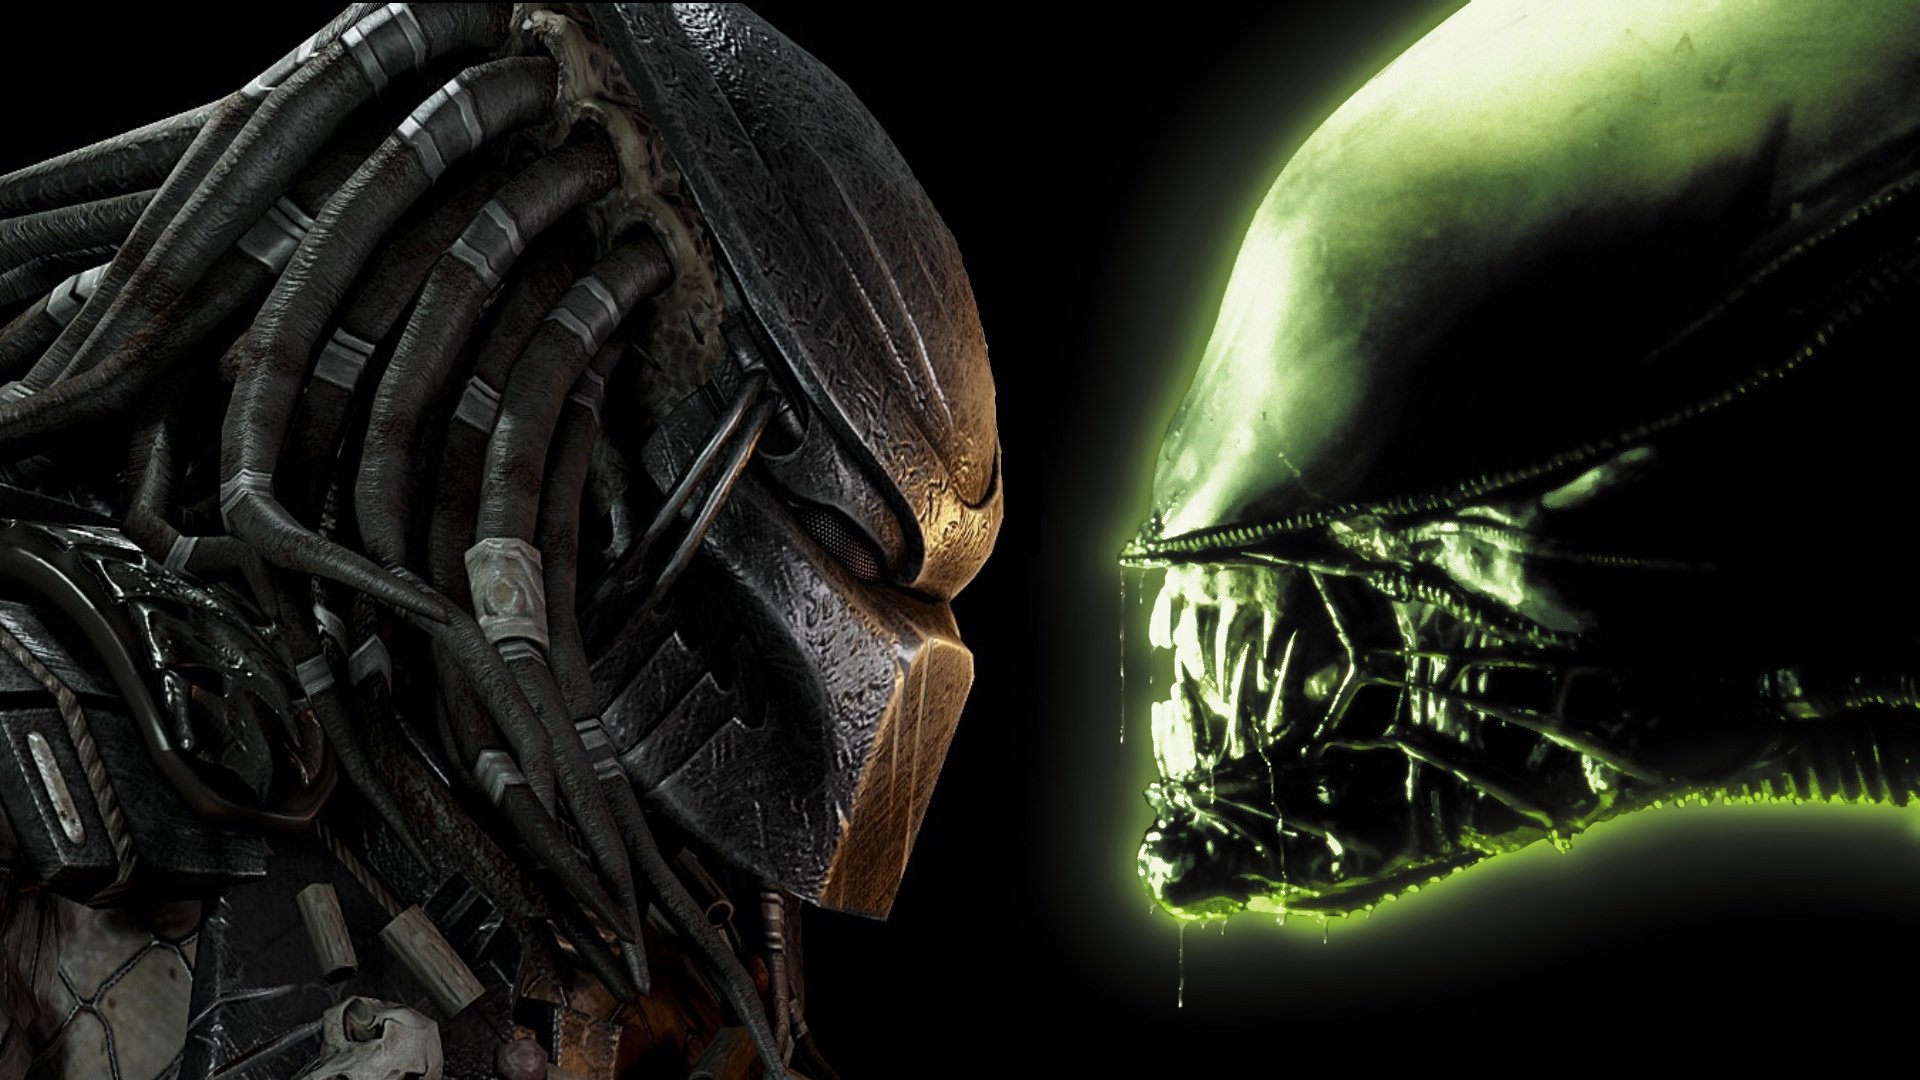 La fin alternative de The Predator avait des connexions avec Alien